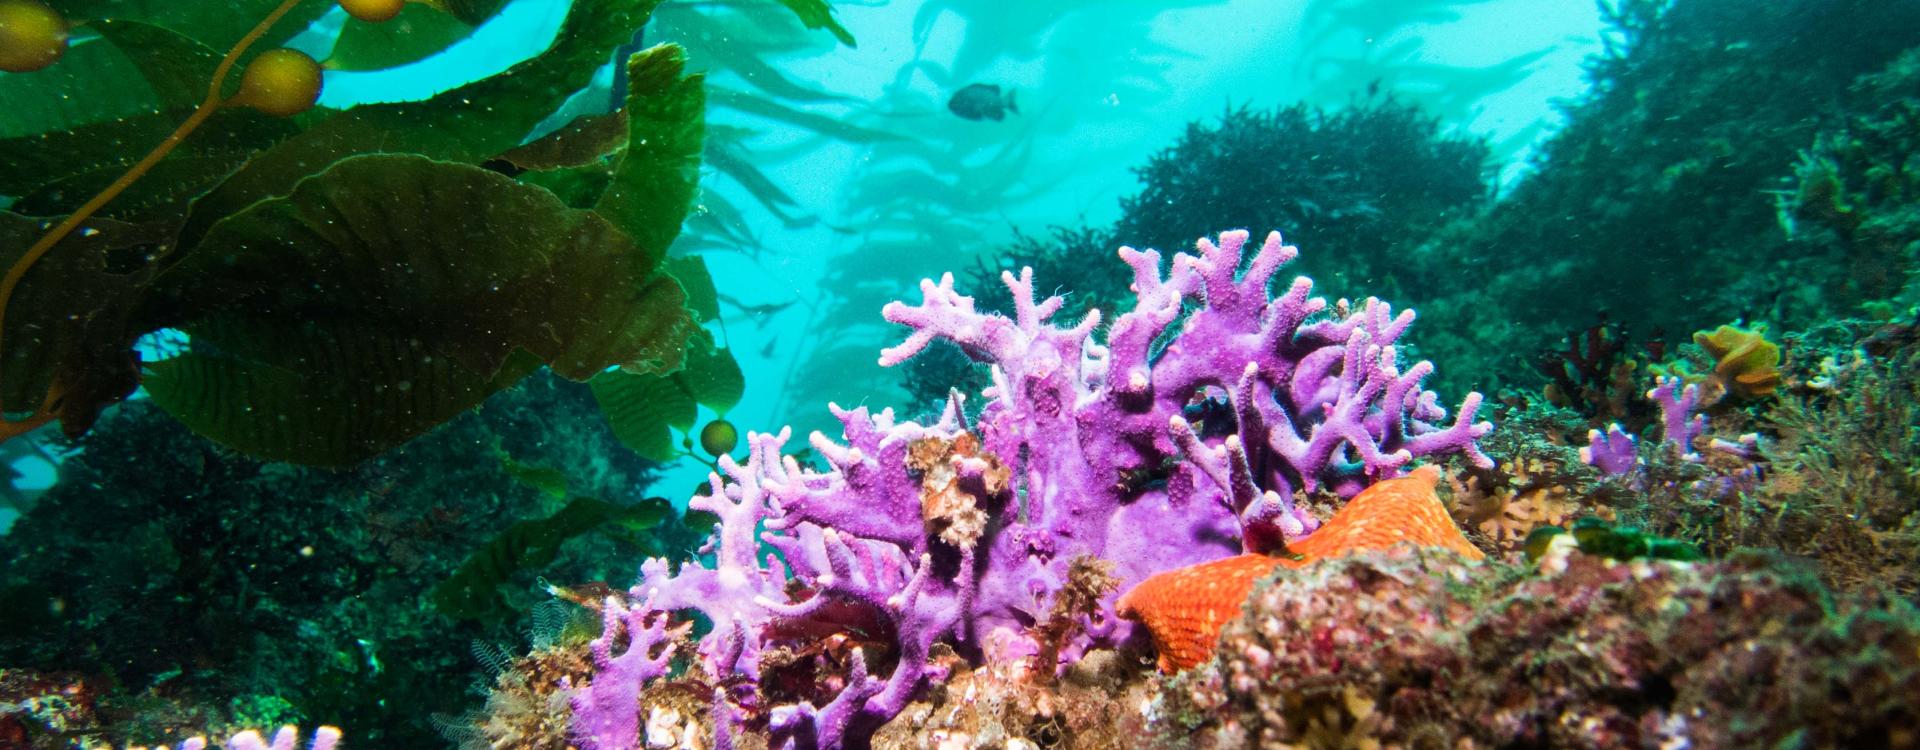 Giant kelp, purple coral, and orange seastar